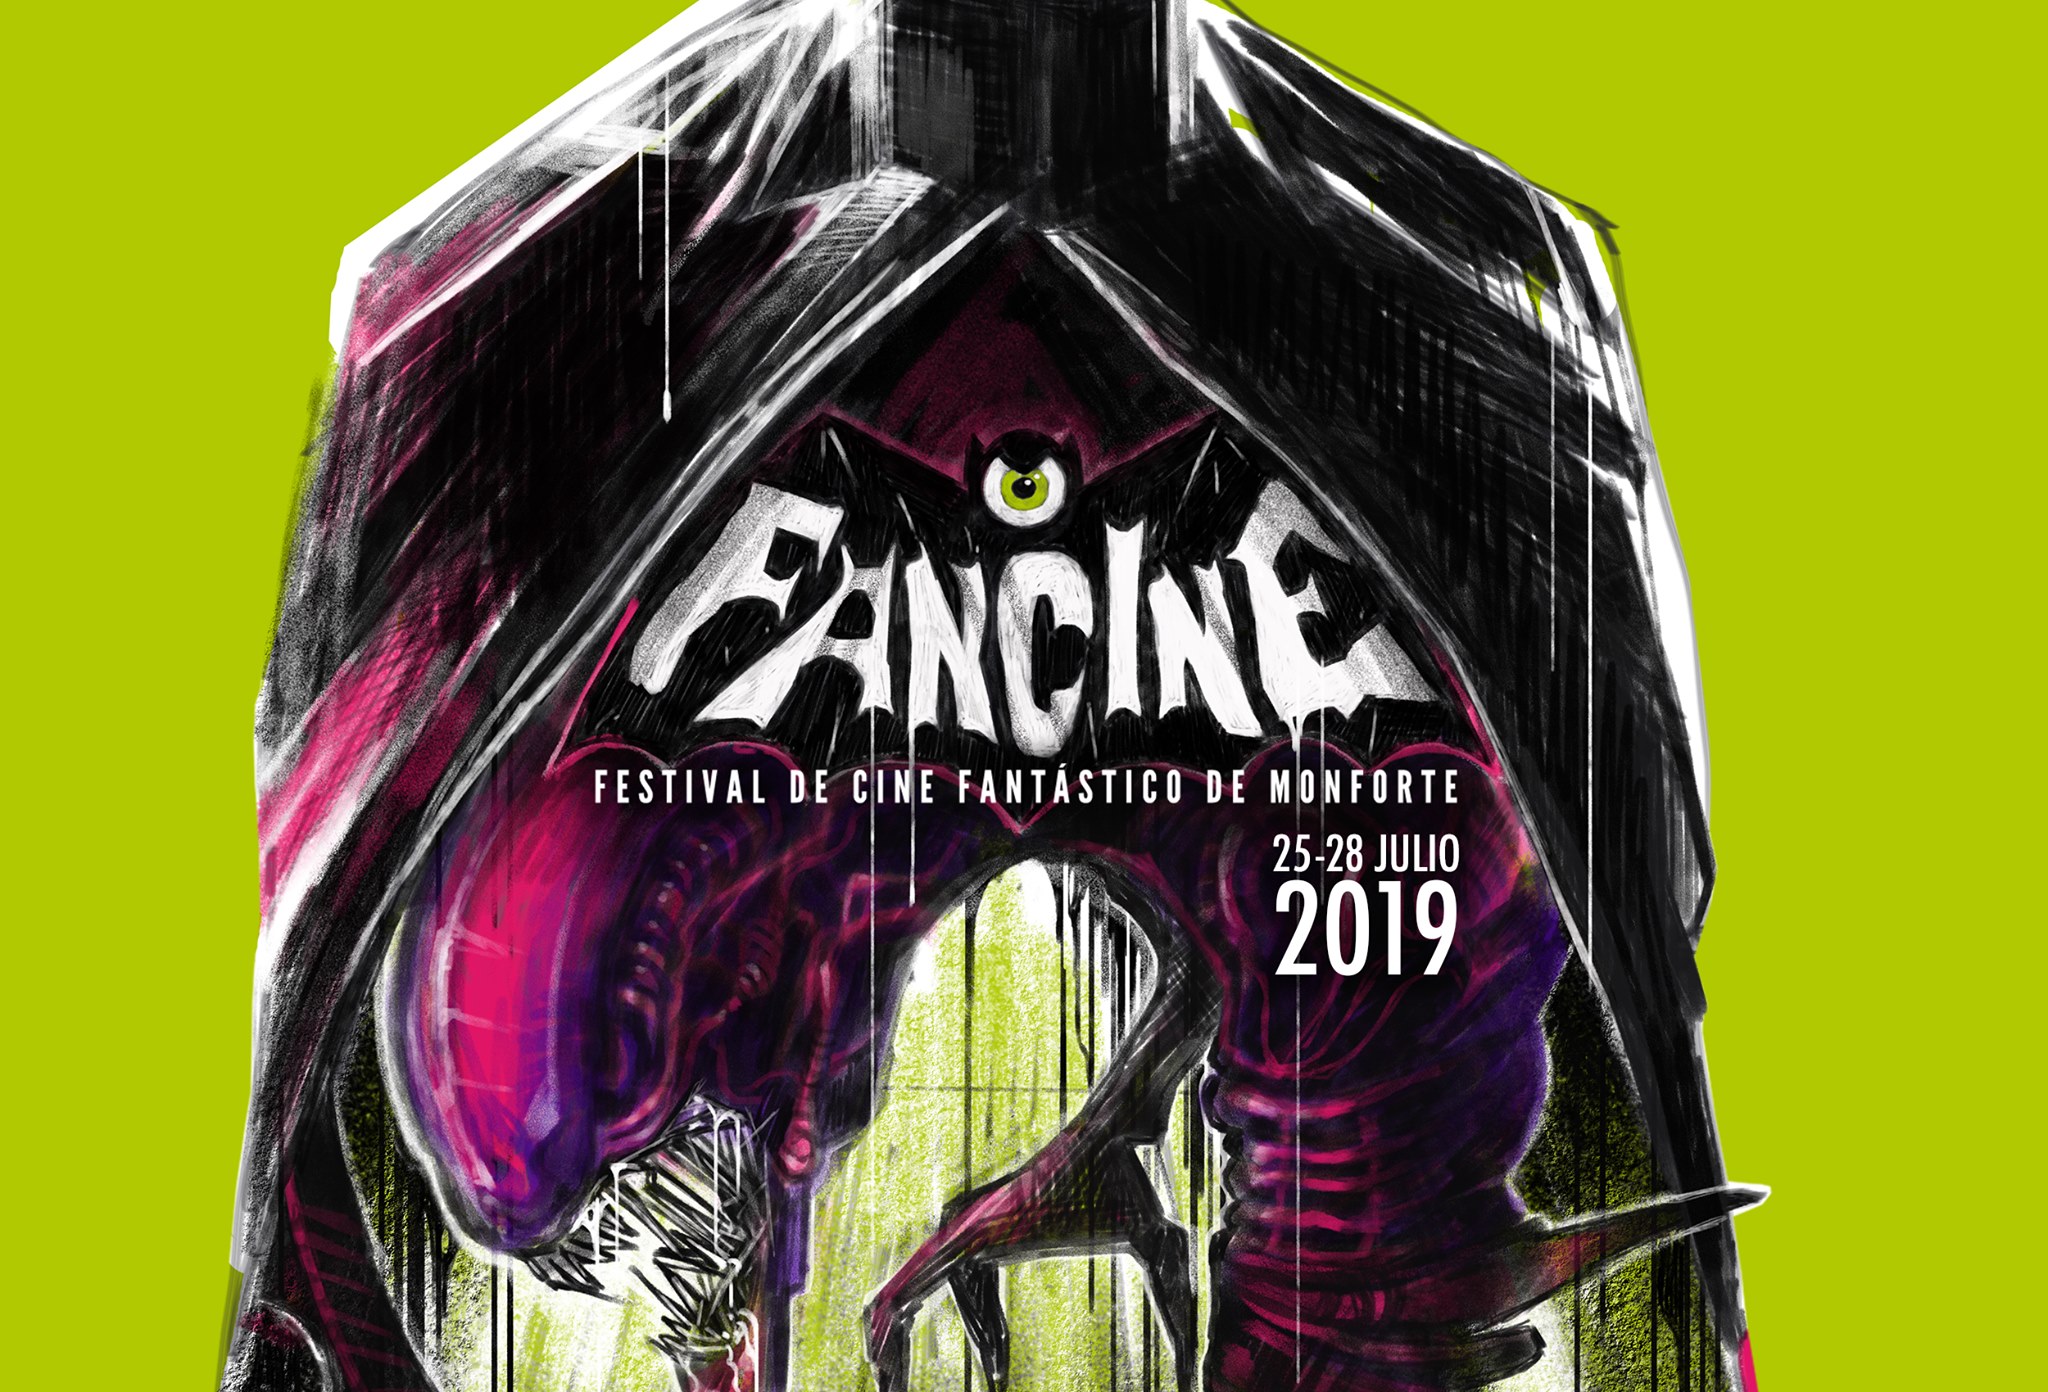 FanCine - Festival de cine fantástico de Monforte de Lemos